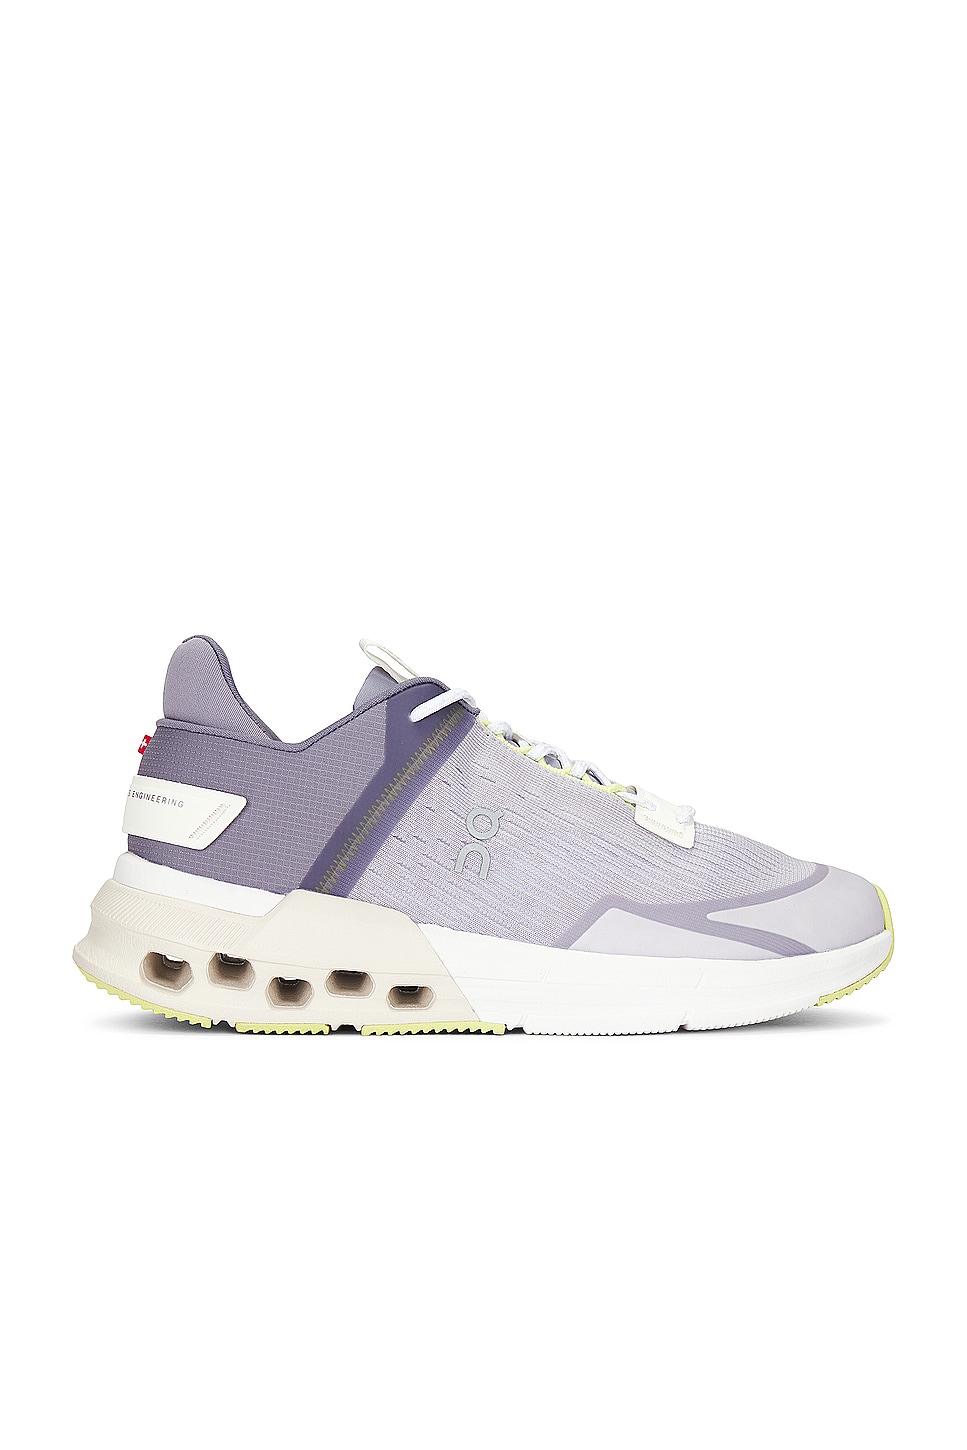 Cloudnova Flux Sneaker in Lavender